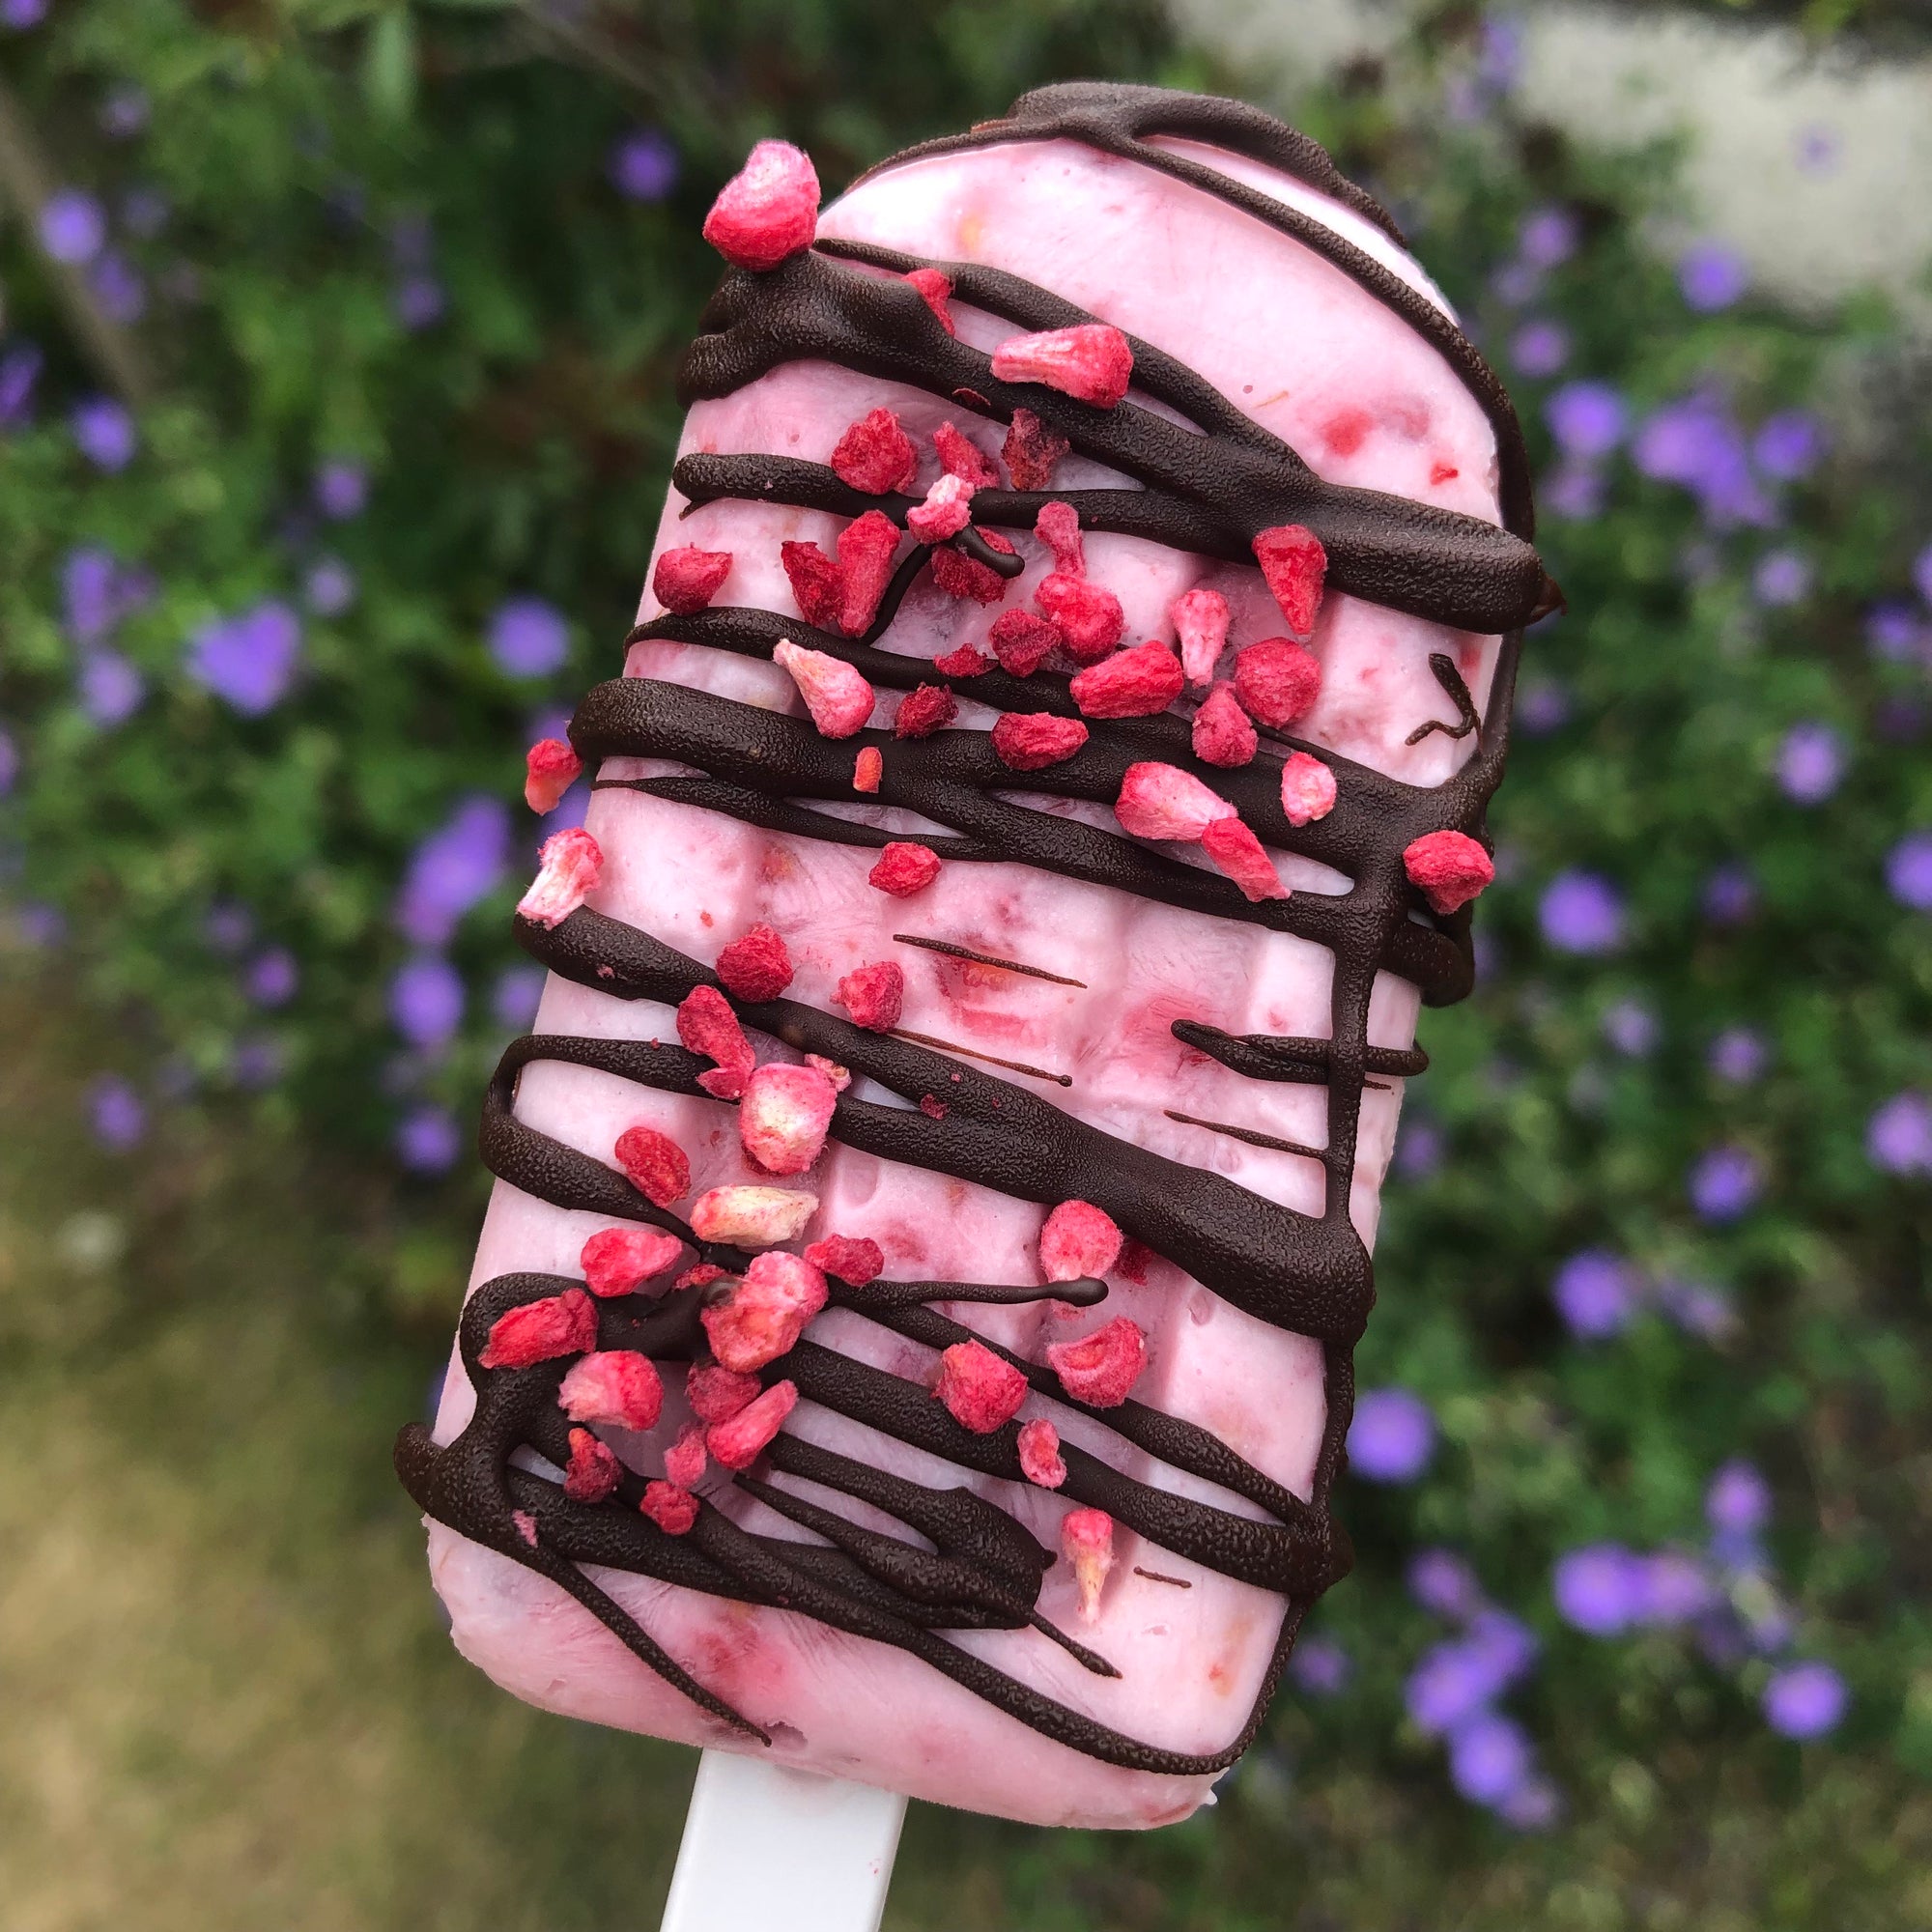 Raspberry ripple & dark chocolate ice lollies